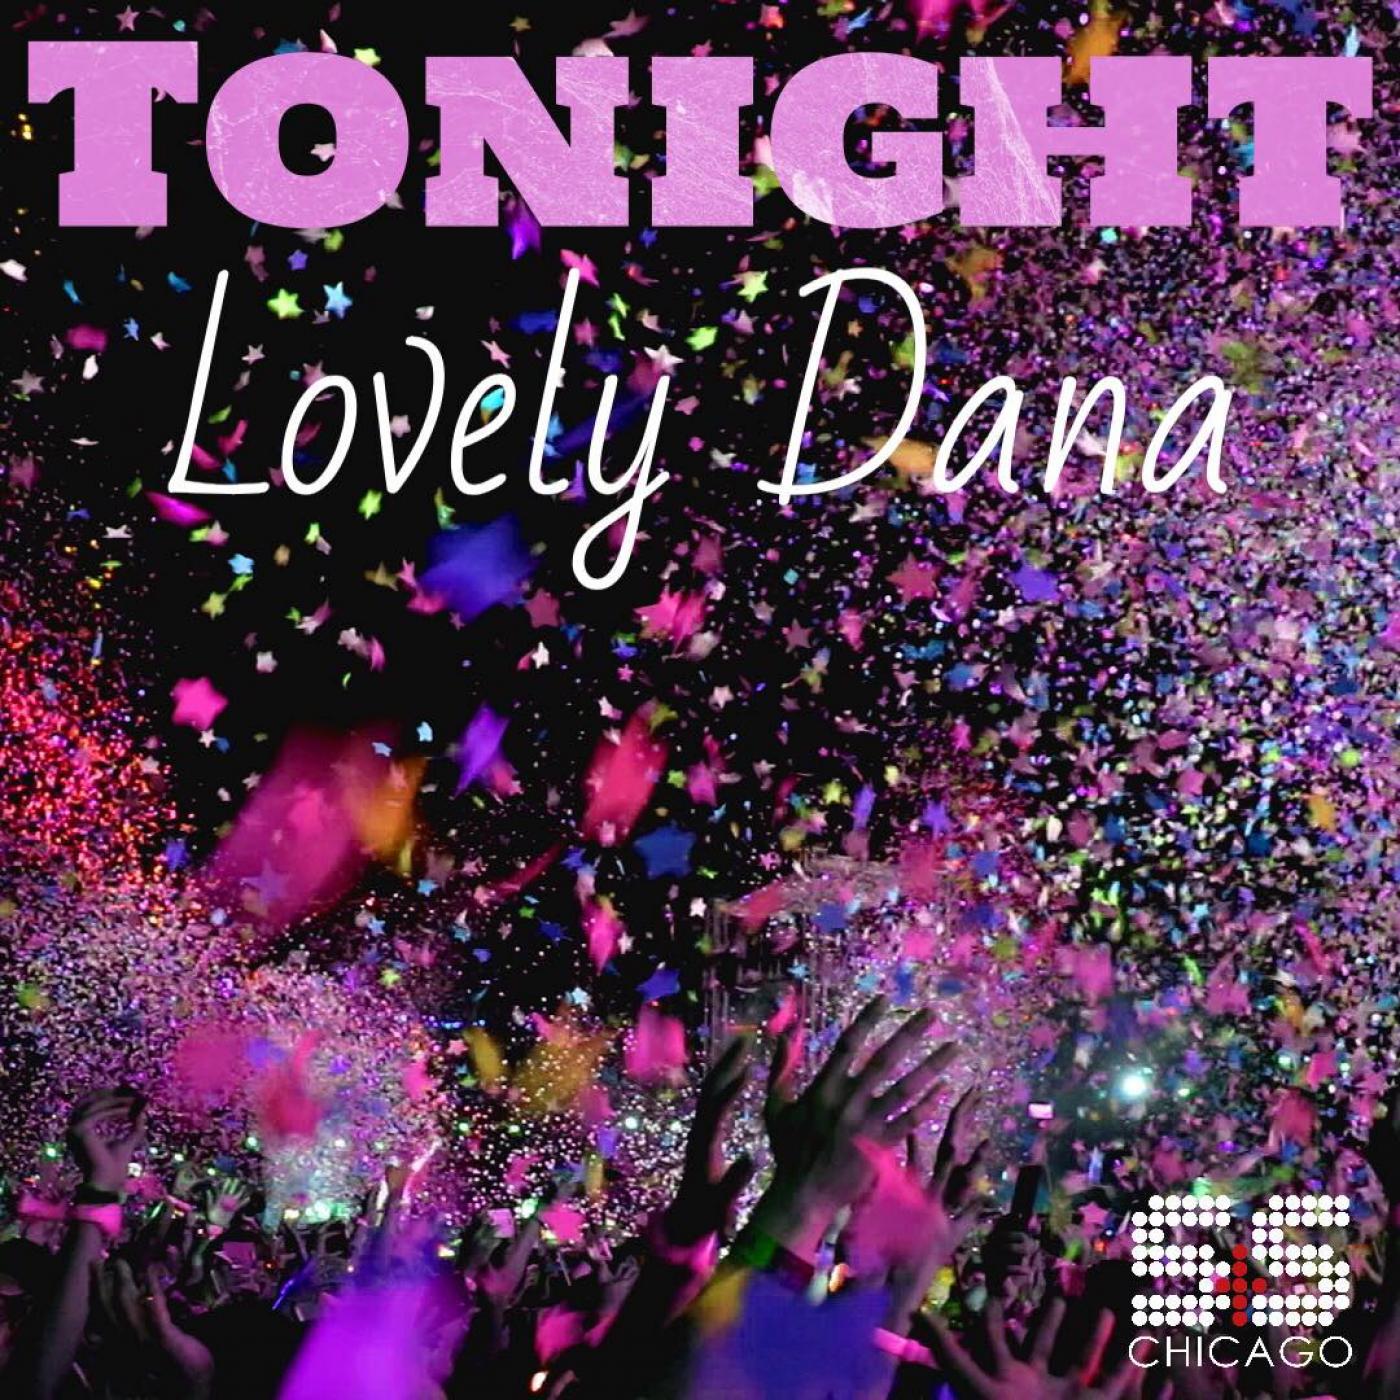 Women in love dana. Tonight песня. Dana Love. Tonight the Music.